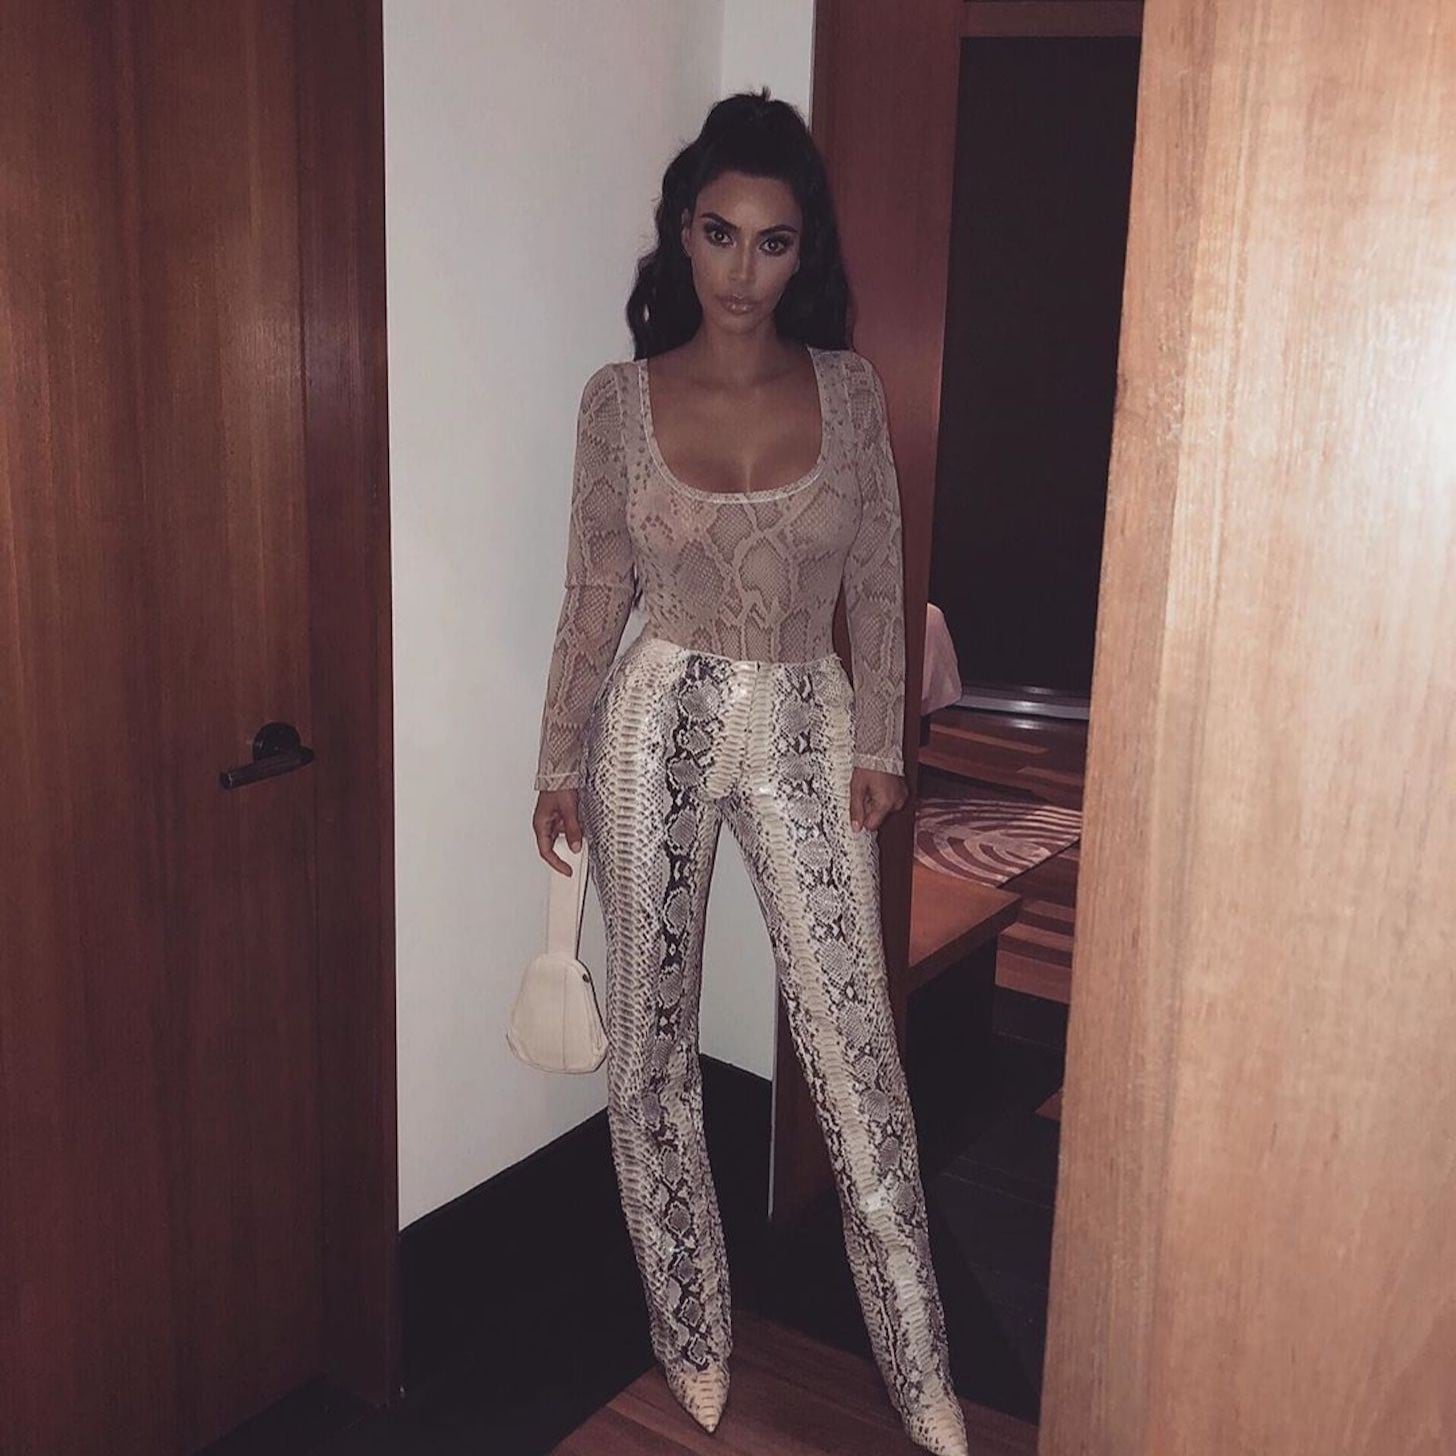 Kim Kardashian's Animal-Print Outfit on Instagram